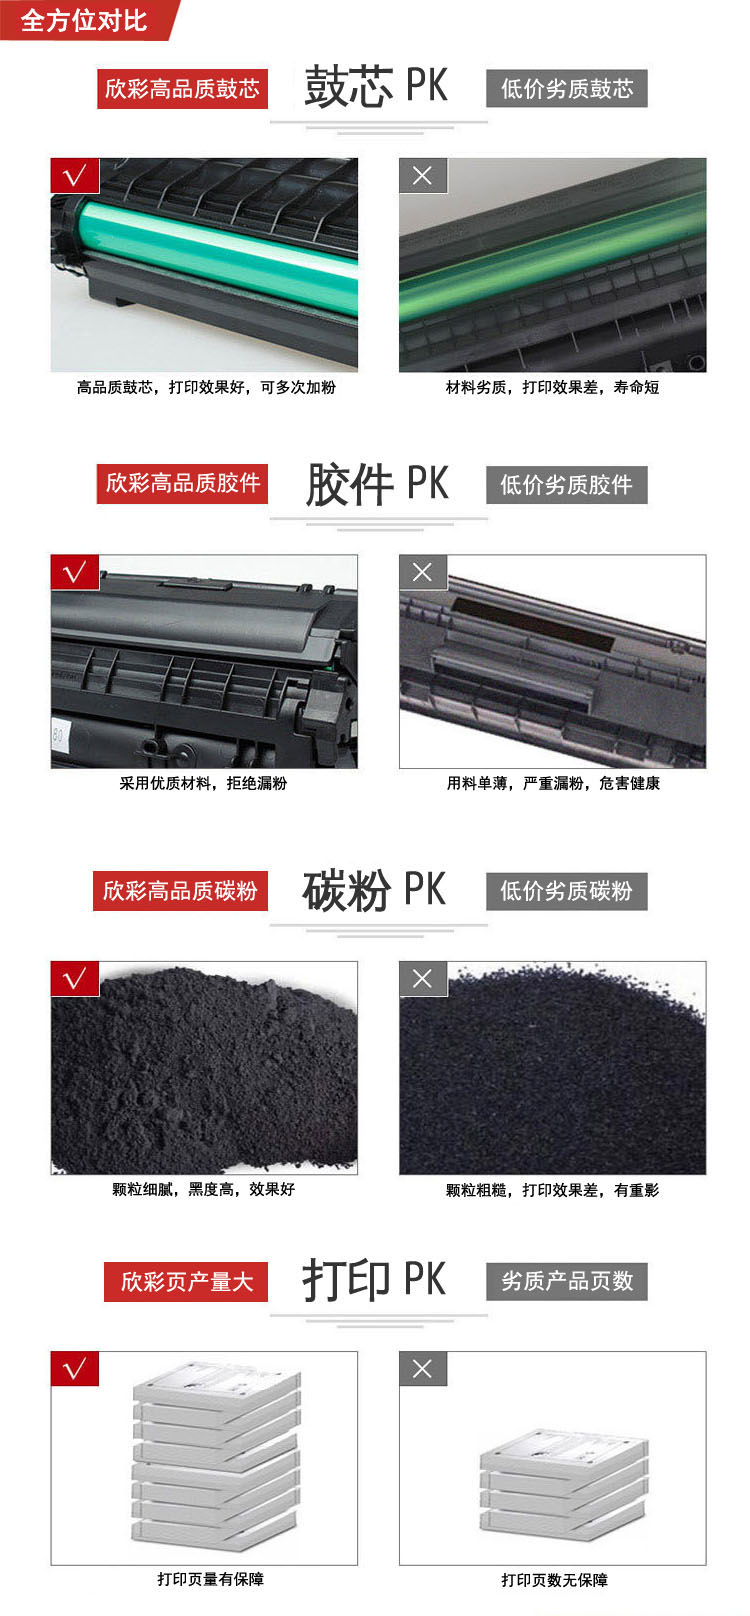 Anycolor欣彩AR-Q7570A黑色硒鼓/墨粉盒 适用惠普Q7570A,HP M5025/M5035 黑色